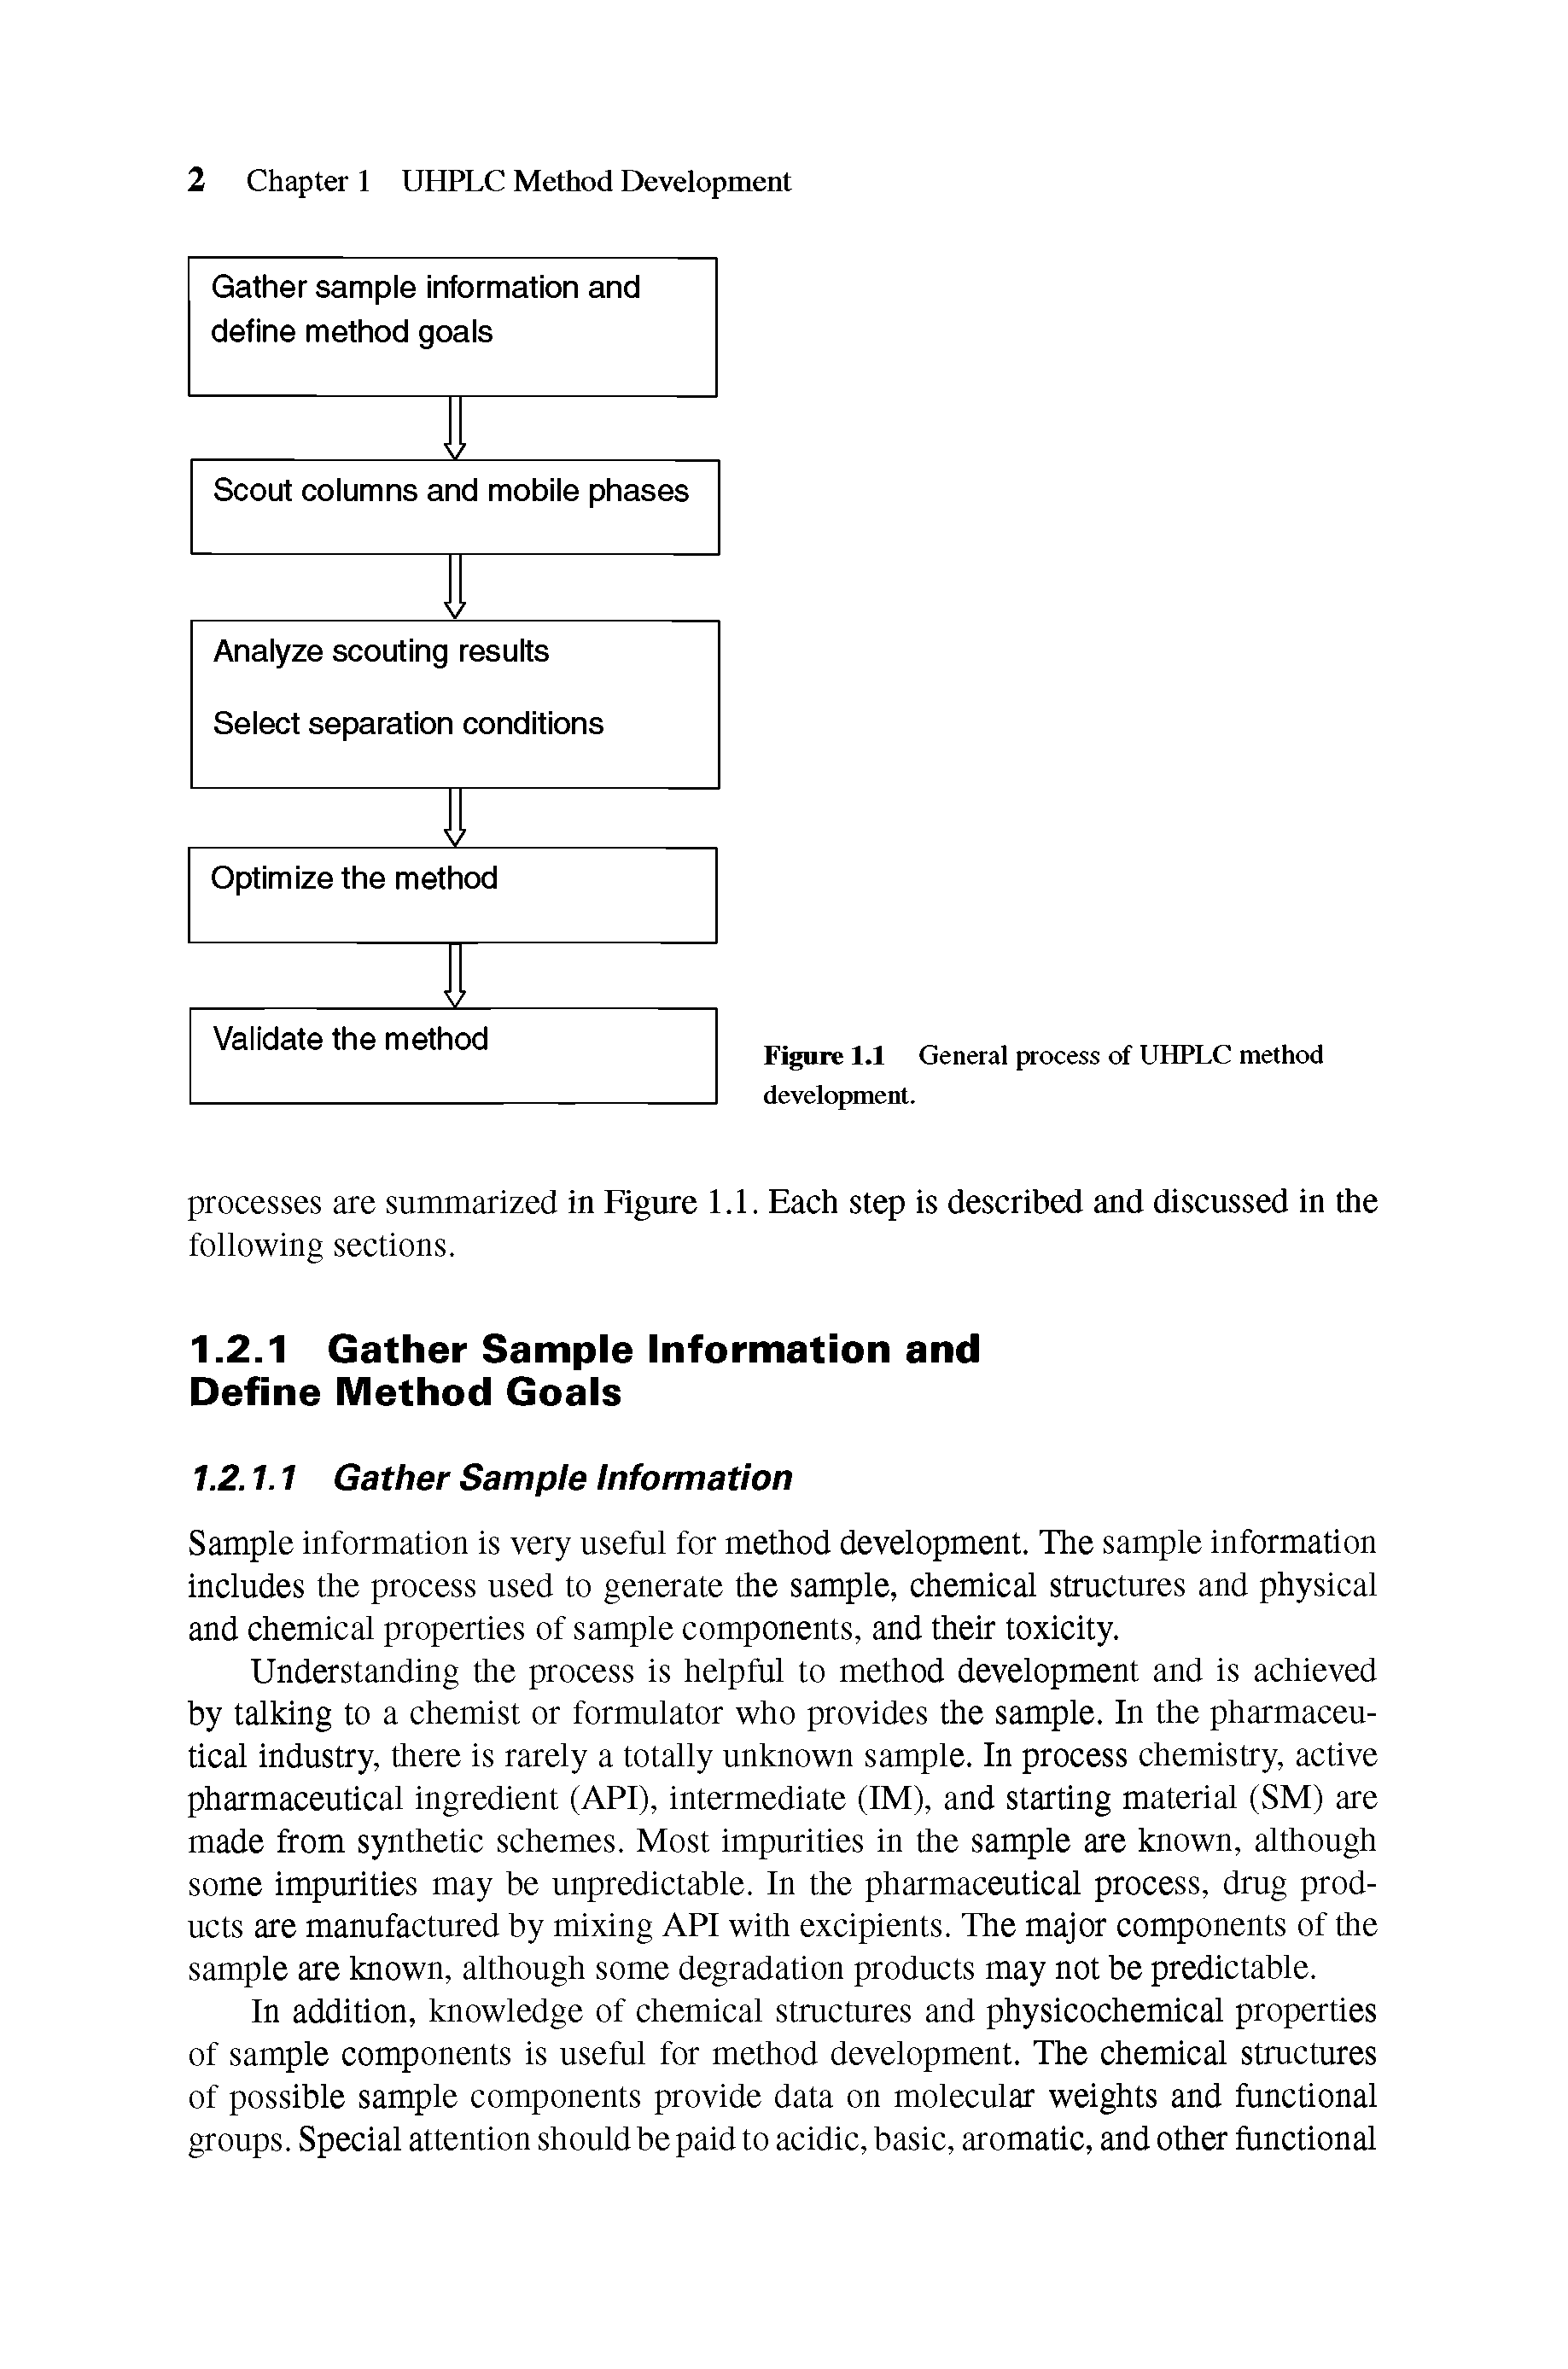 Figure 1.1 General process of UHPLC method development.